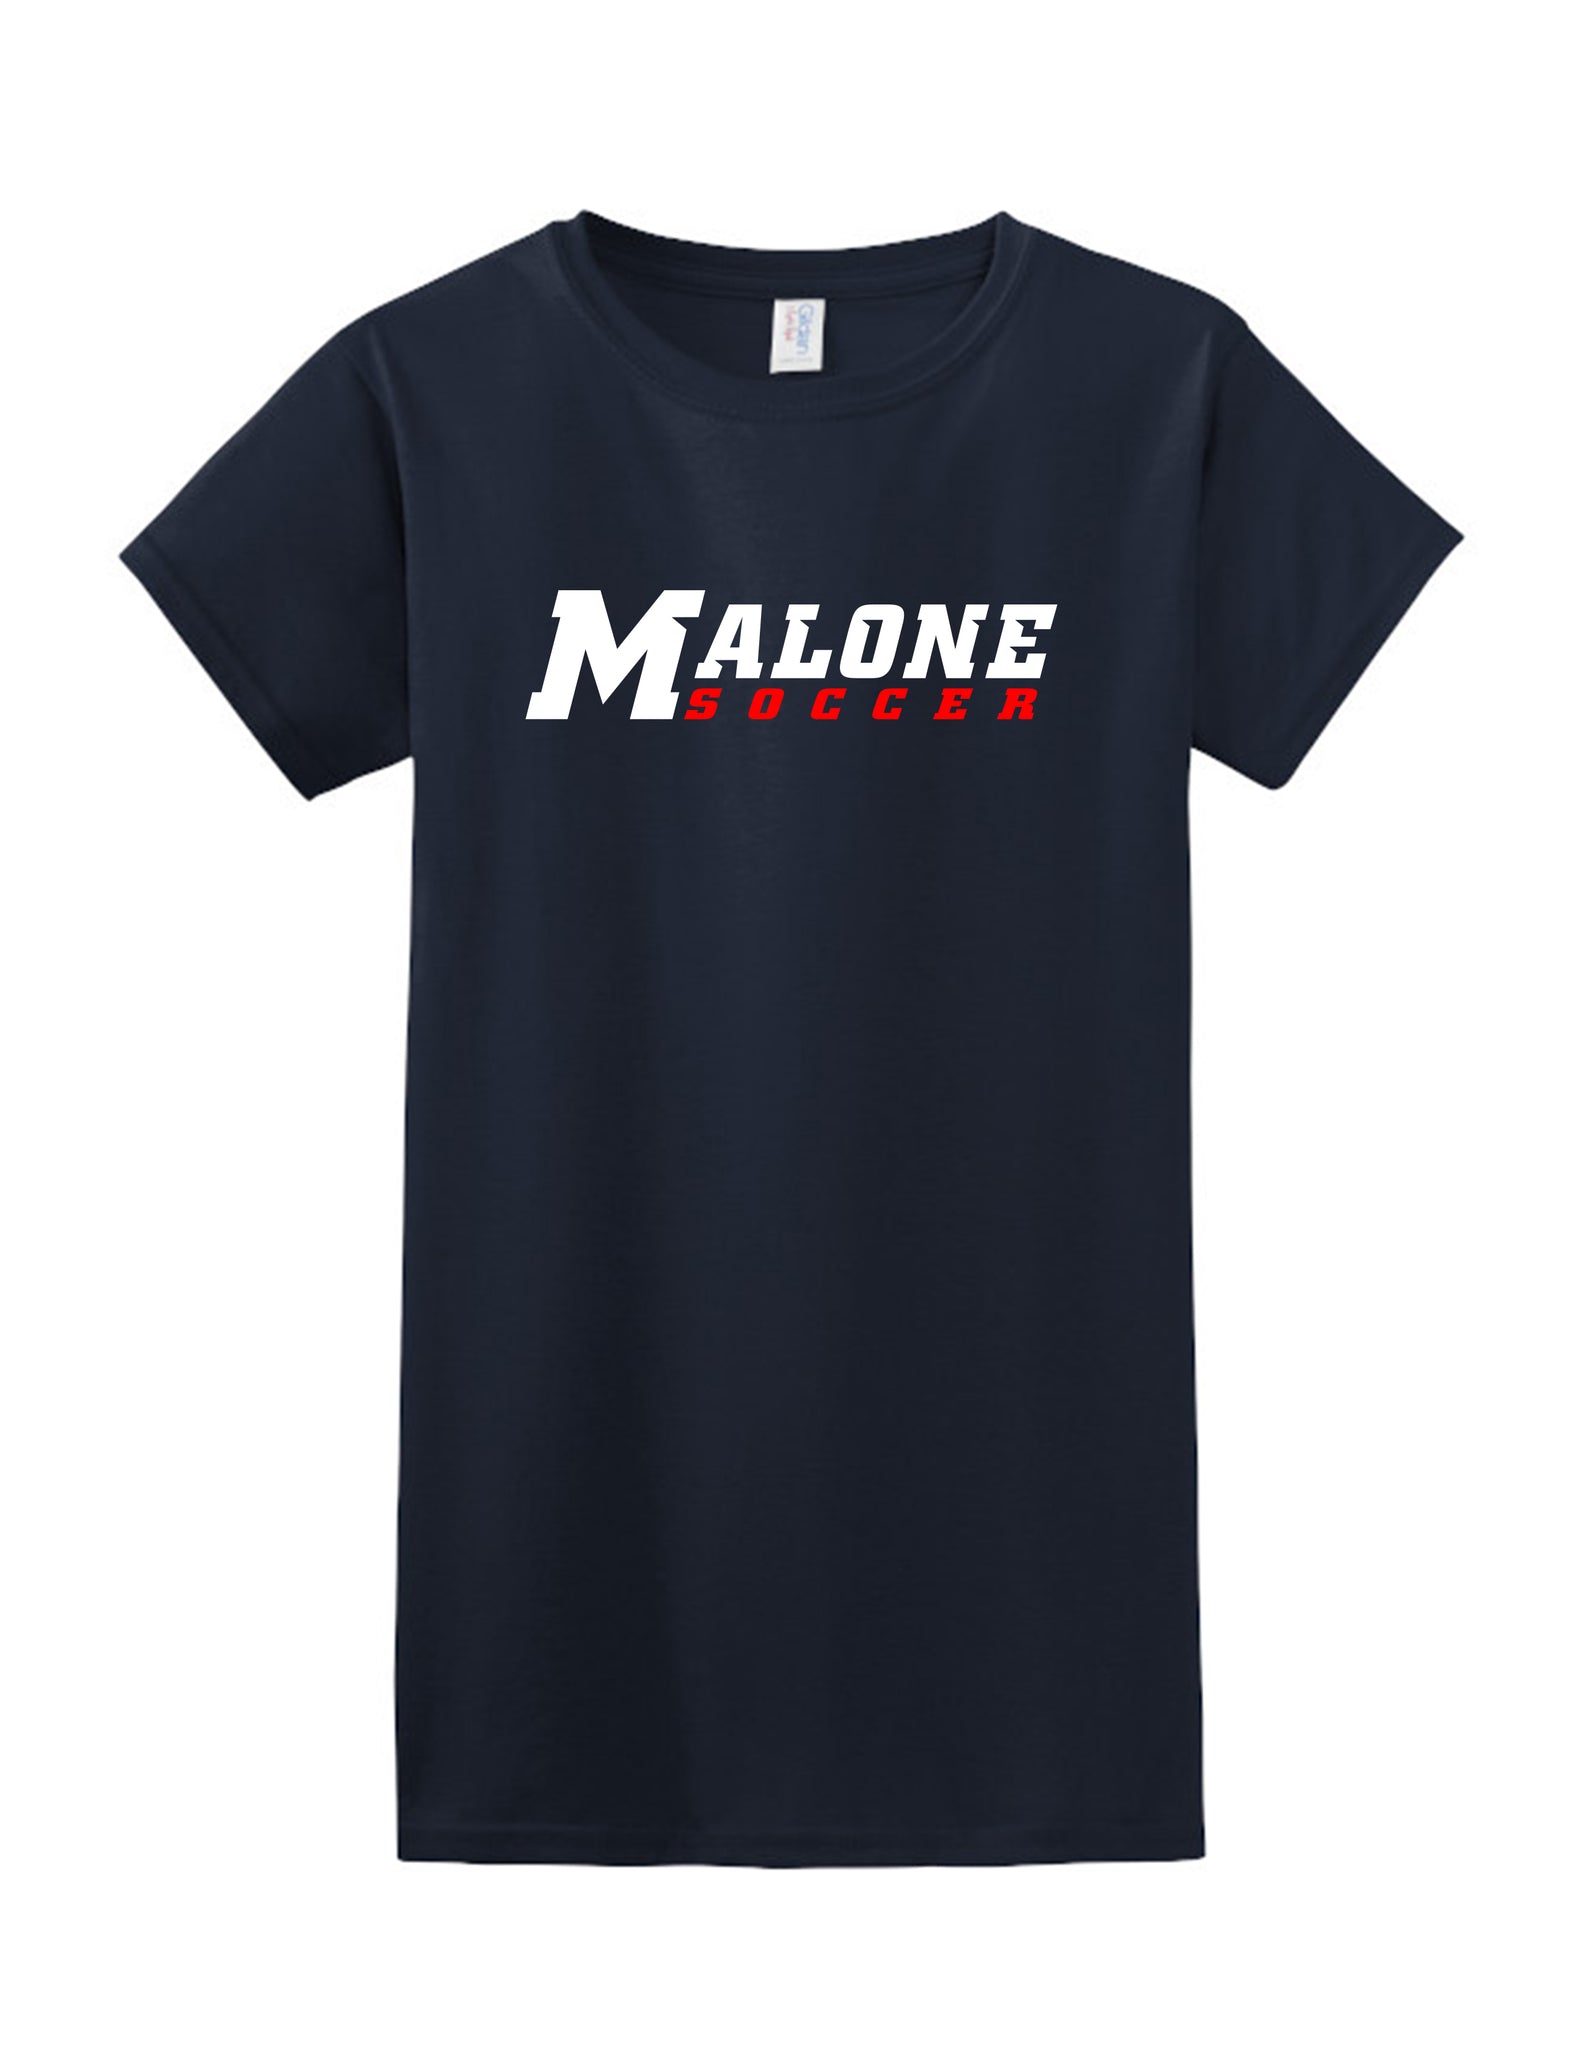 Malone Women's Soccer Women's T-Shirt